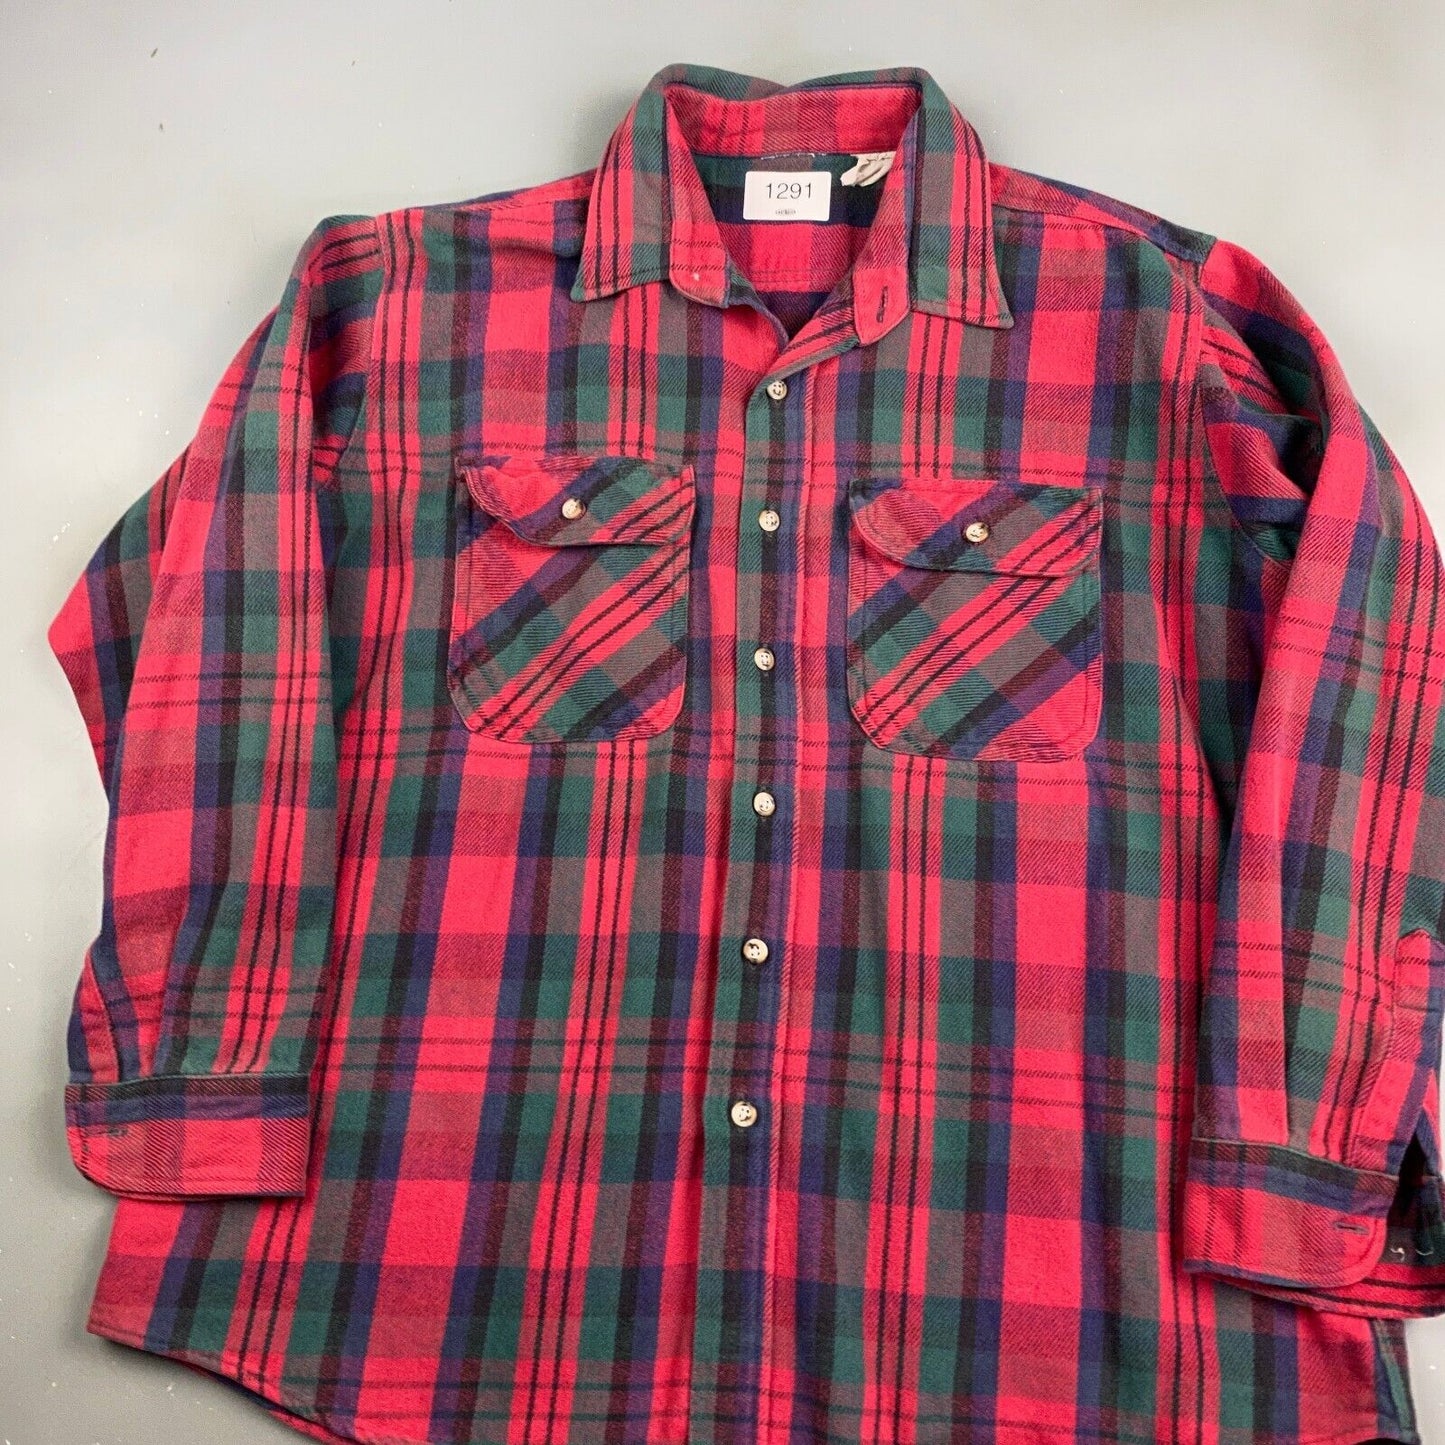 VINTAGE 90s Faded Plaid Flannel Button Up Shirt sz XL Adult